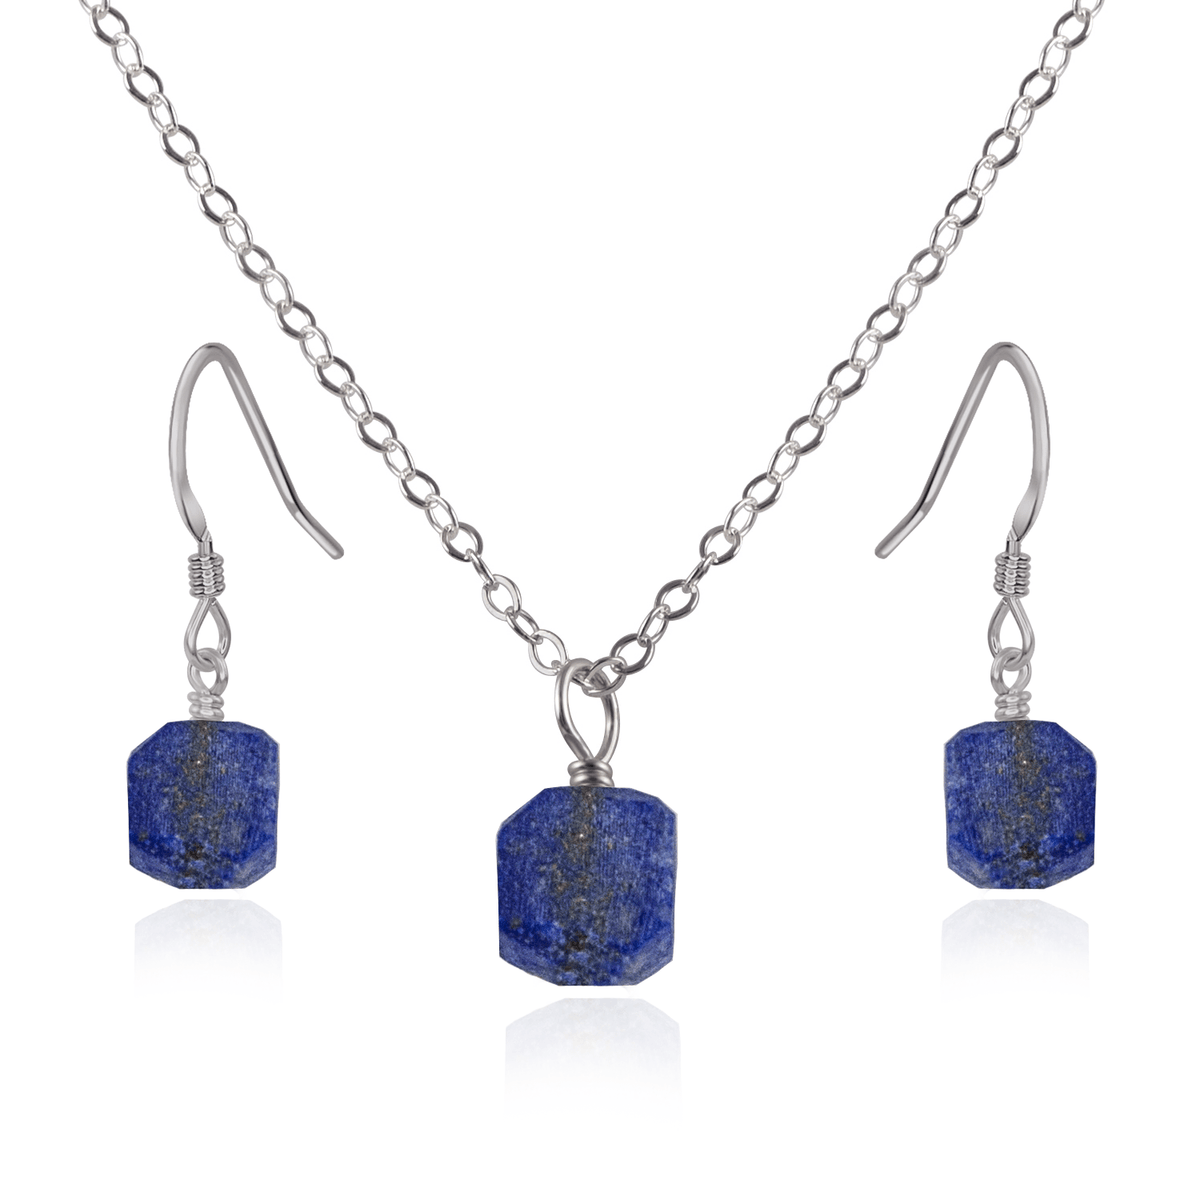 Raw Lapis Lazuli Crystal Earrings & Necklace Set - Raw Lapis Lazuli Crystal Earrings & Necklace Set - Stainless Steel / Cable - Luna Tide Handmade Crystal Jewellery